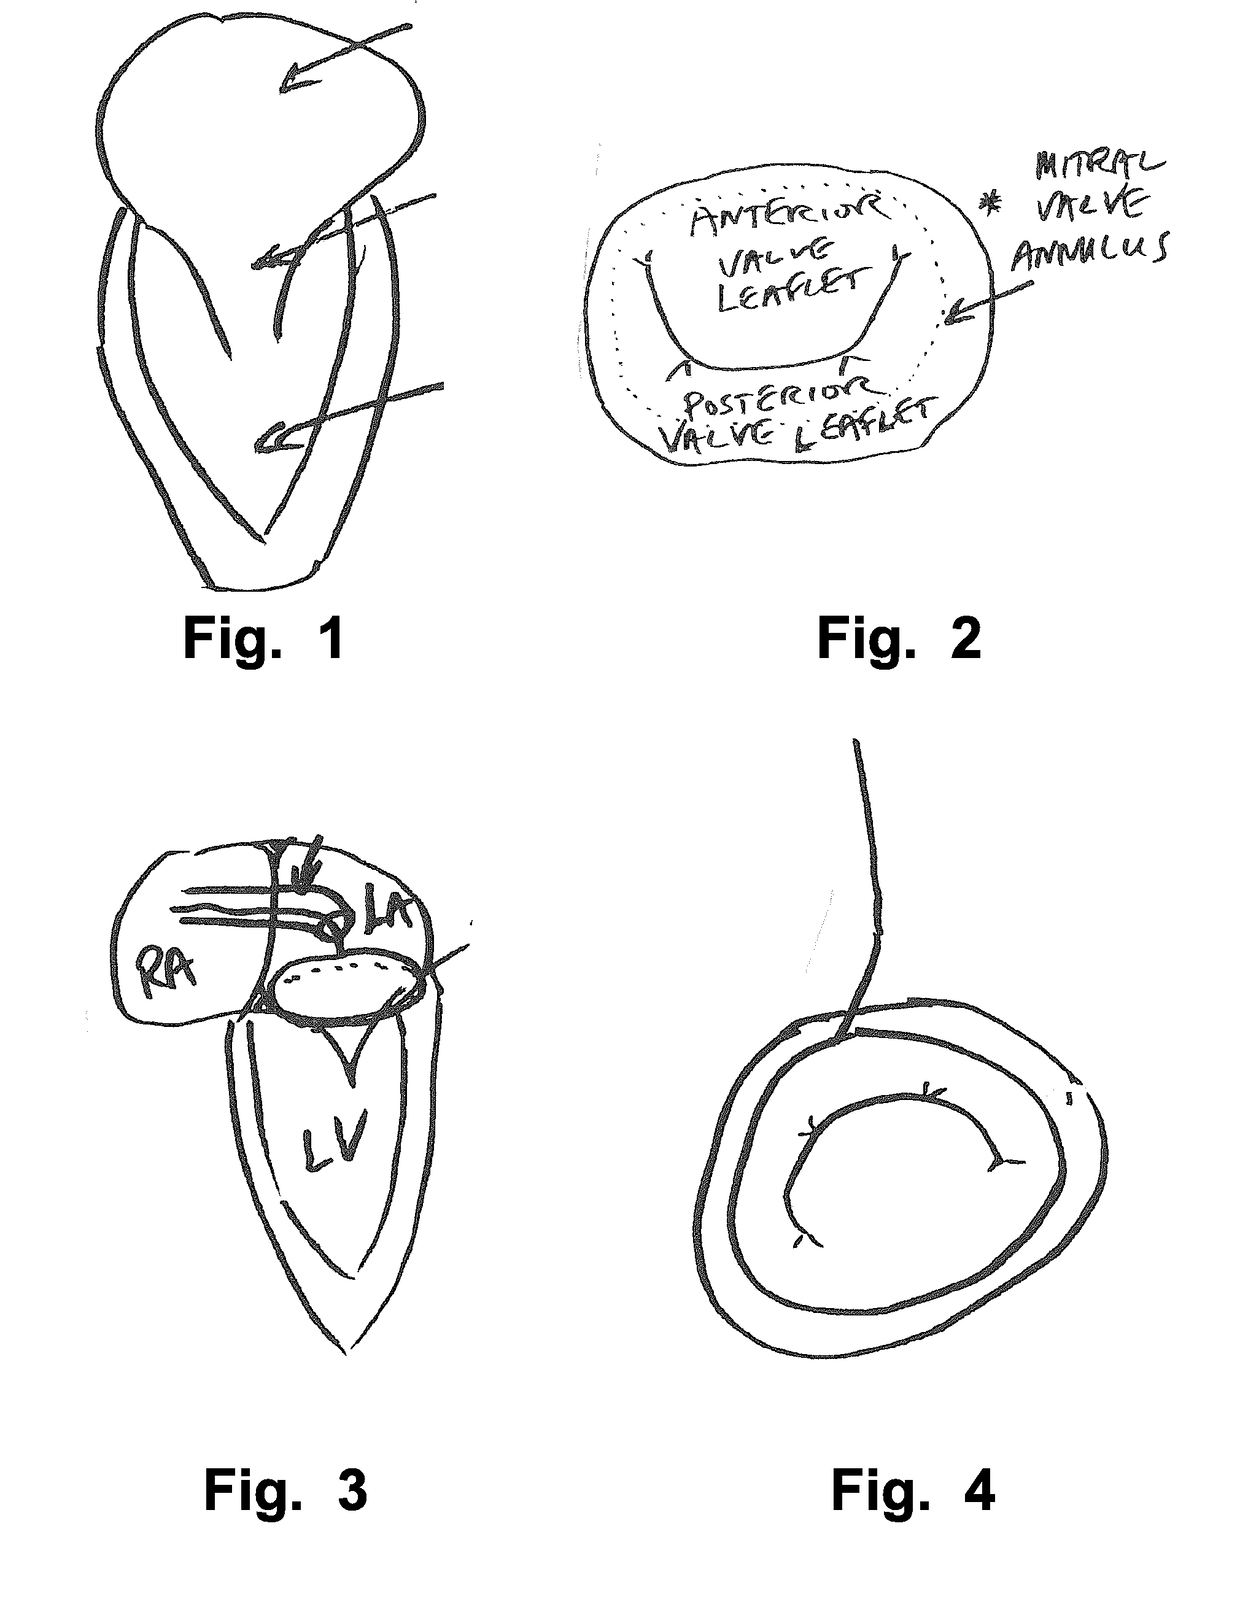 Device and method for reducing cardiac valve regurgitation